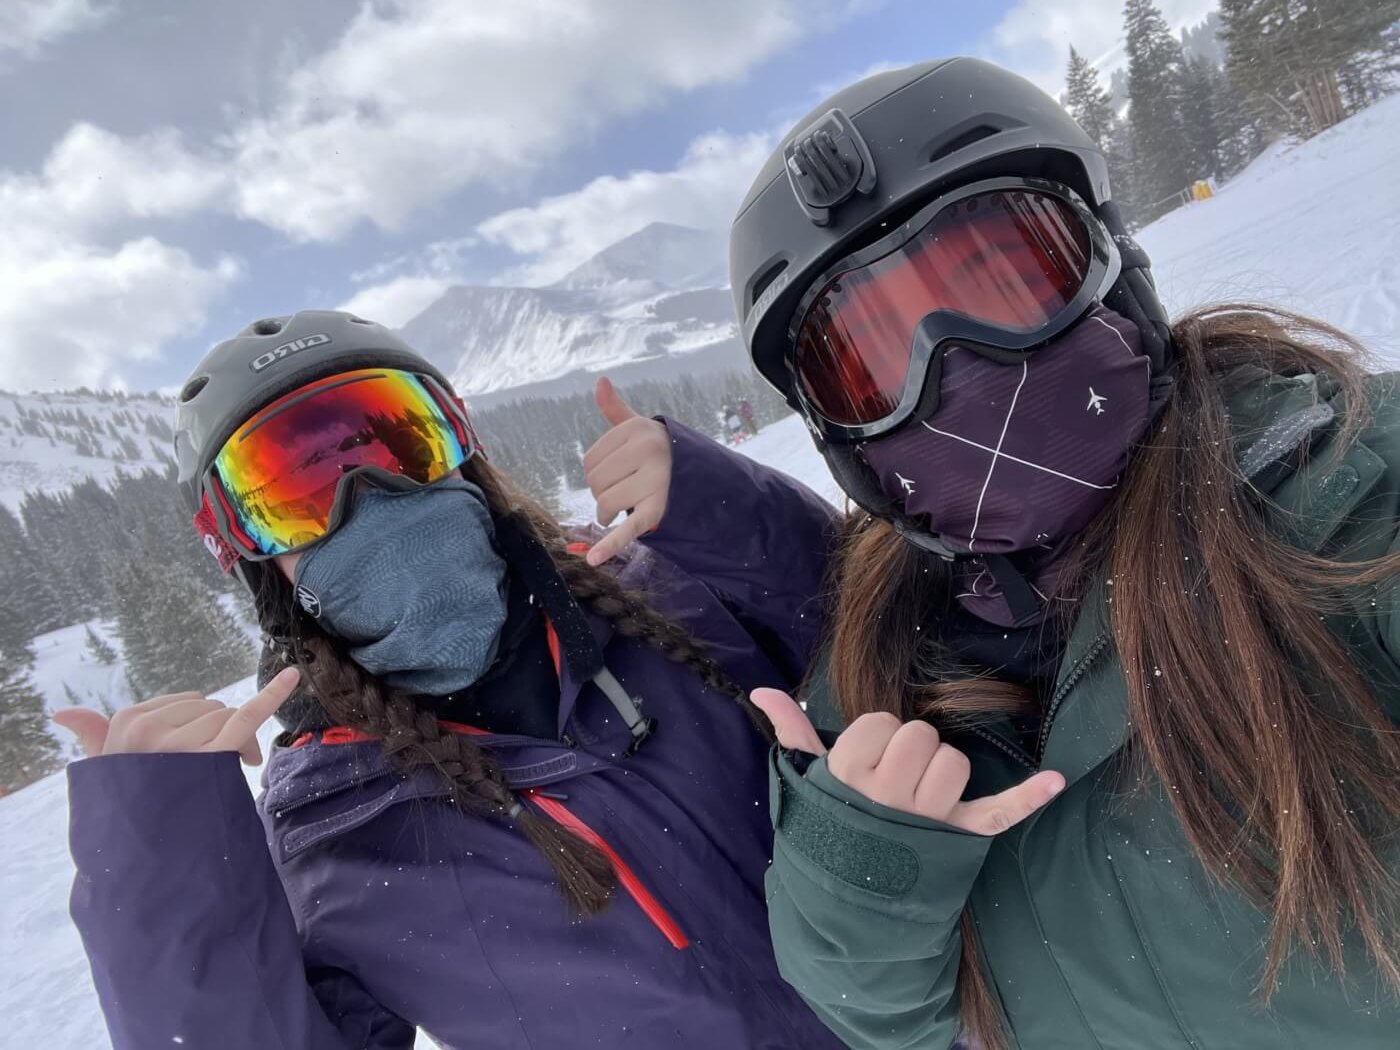 SheJumps scholarship recipient Jessica Beltran dressed in ski gear, taking a photo with her friend, also dressed in ski gear